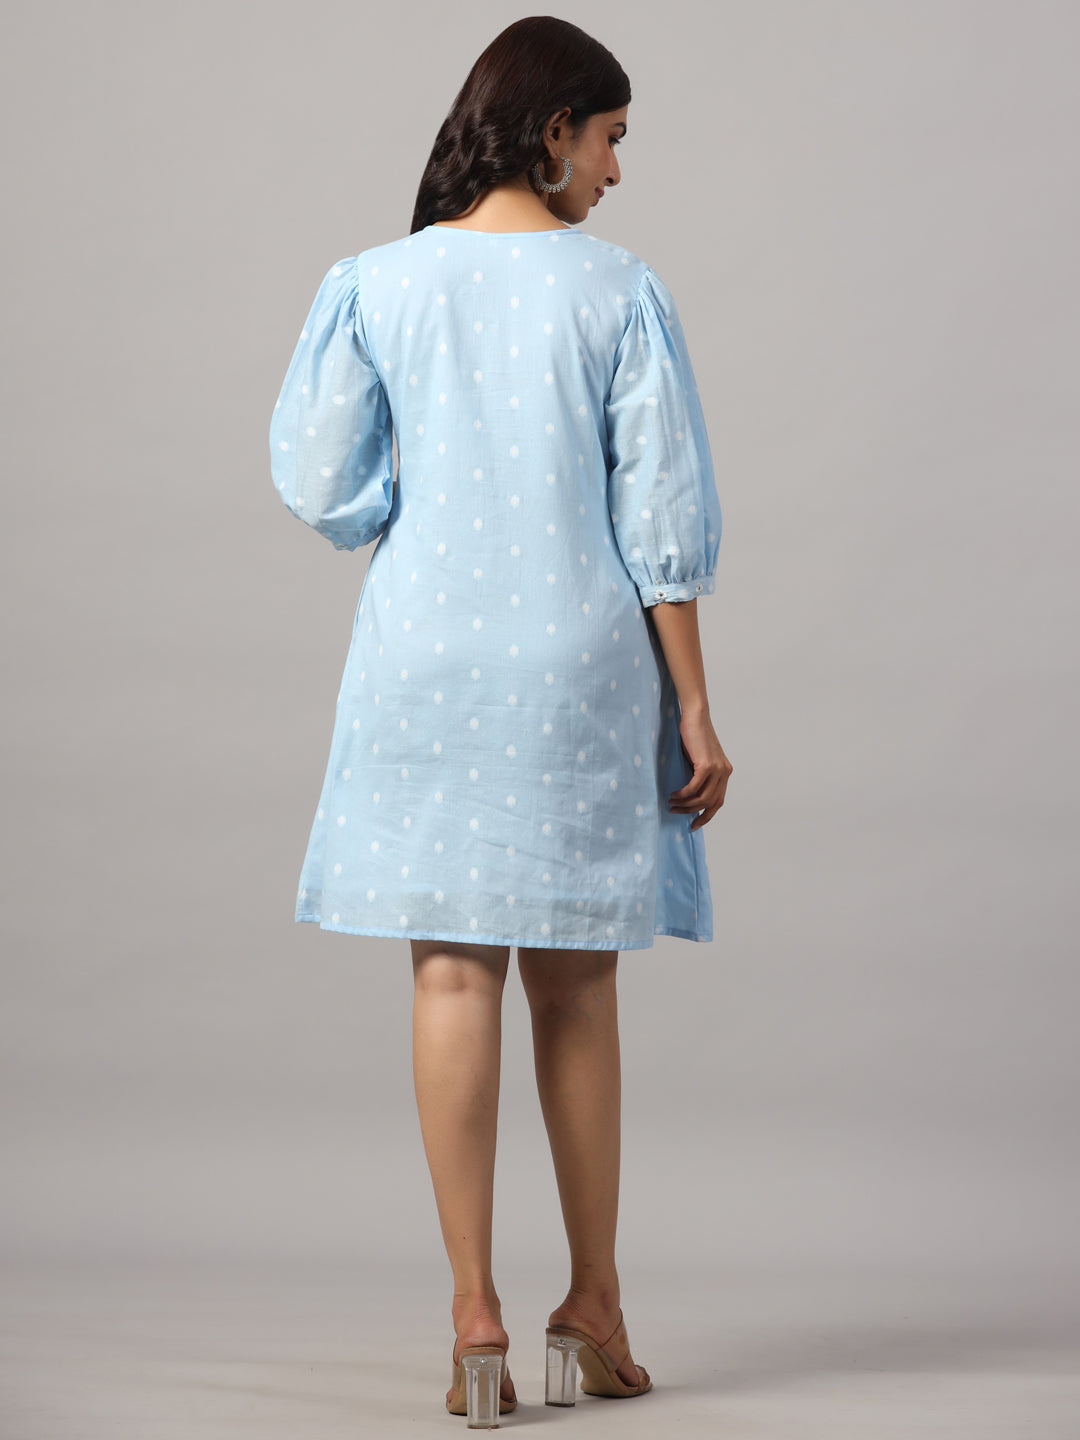 Cotton V Neck Blue Mini Dress